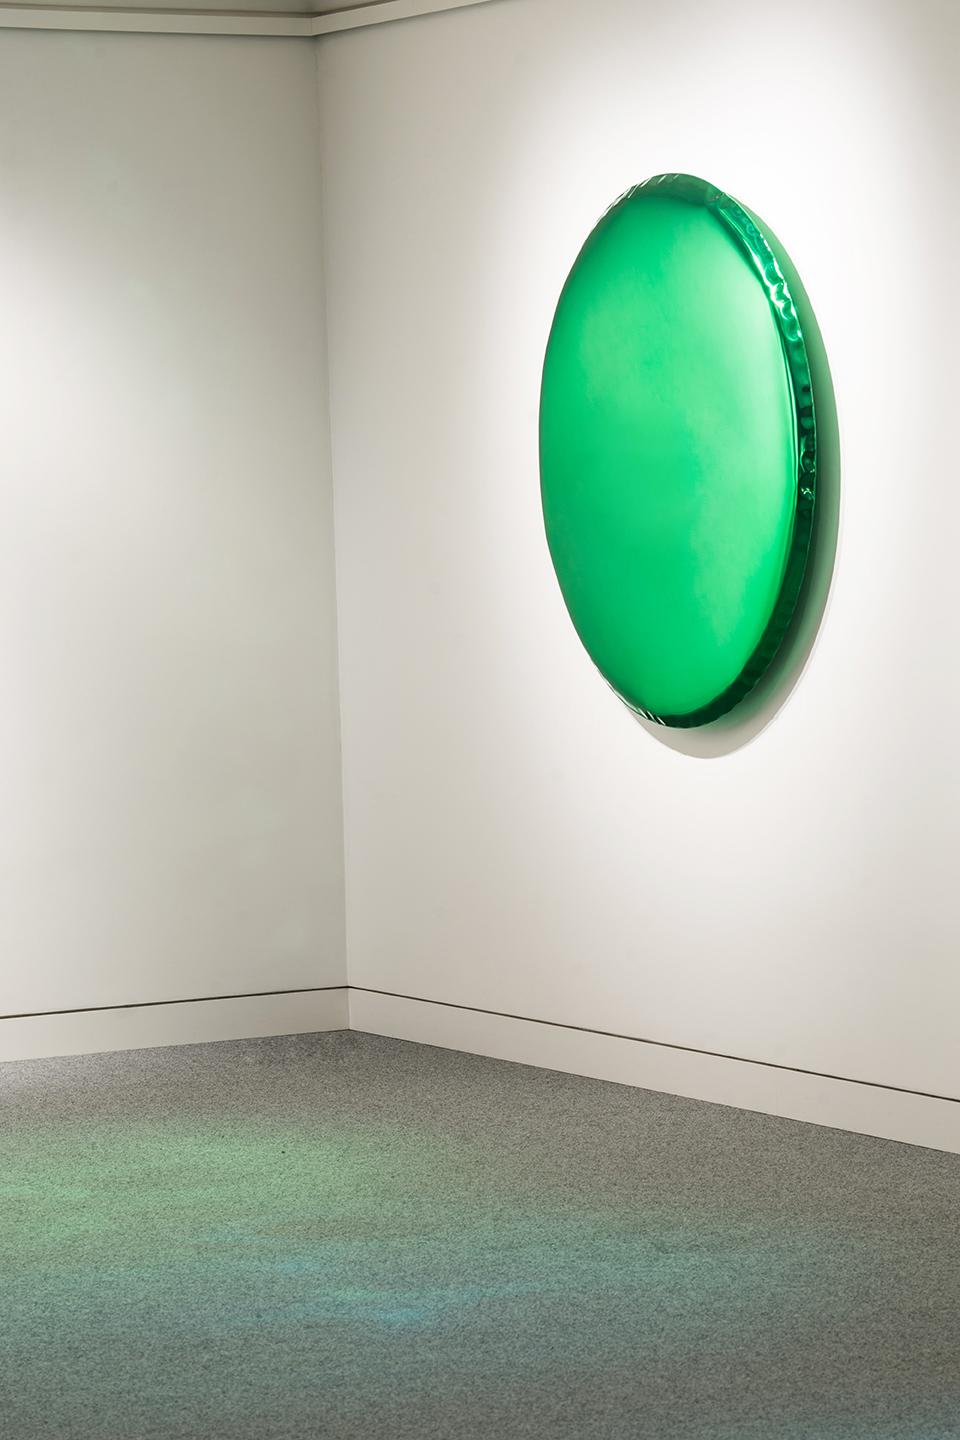 Organic Modern Round Mirror 'Oko 75' in Stainless Steel by Zieta, Emerald For Sale